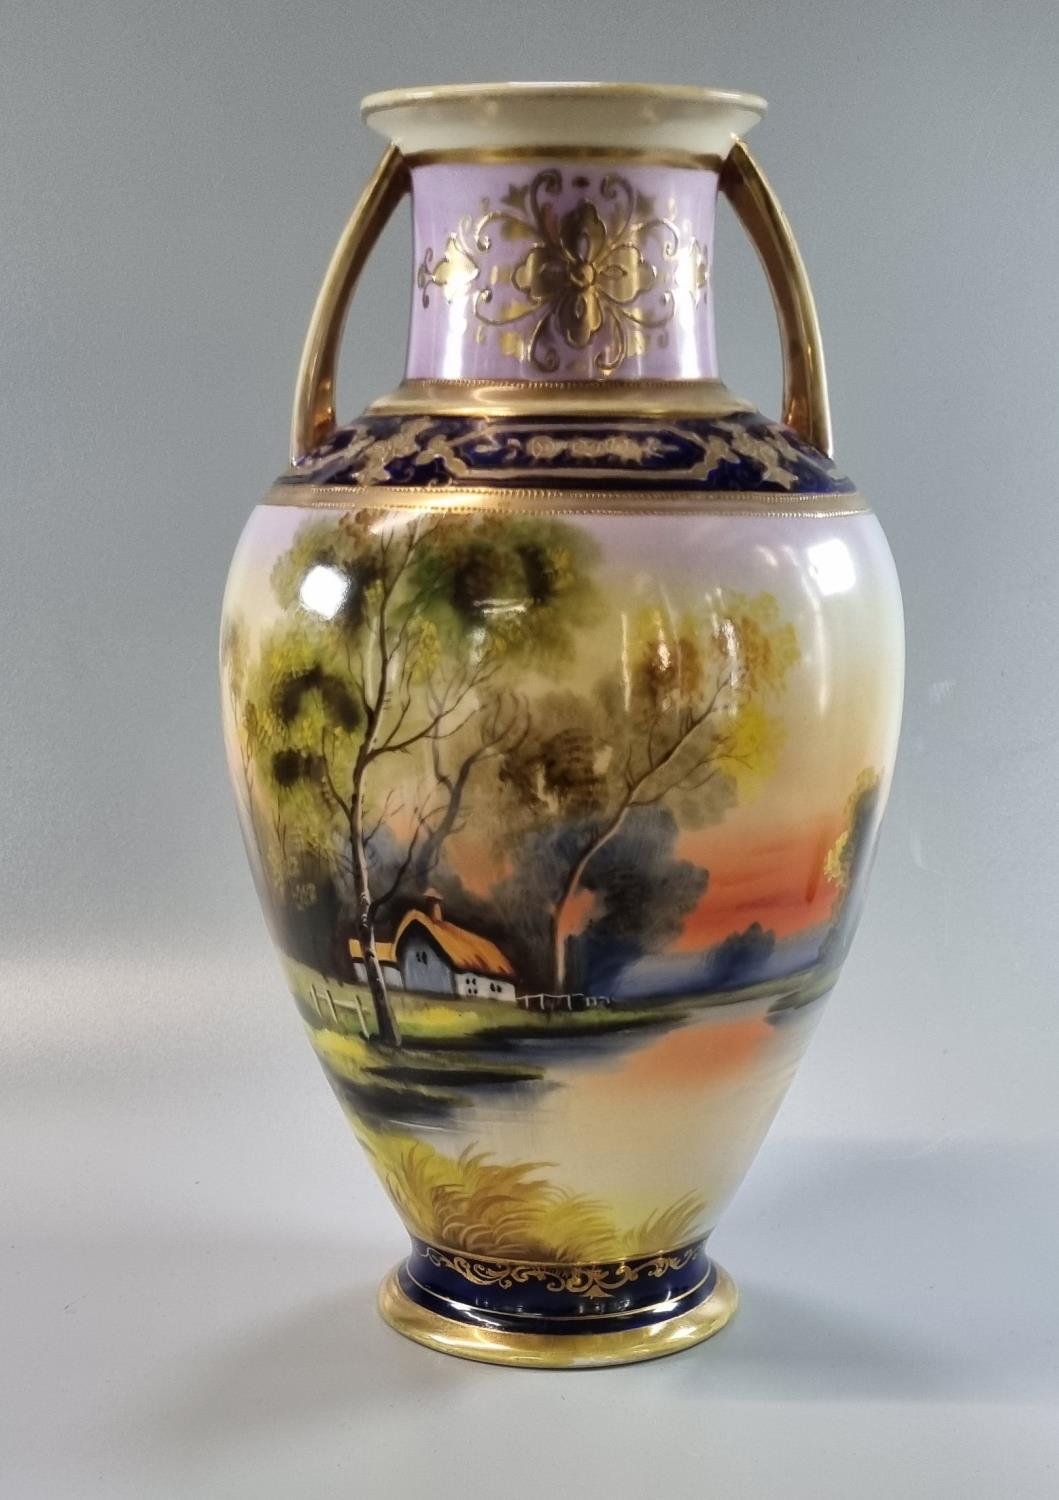 Noritake Japanese porcelain two handled baluster vase depicting rural lake and cottage scene. Height